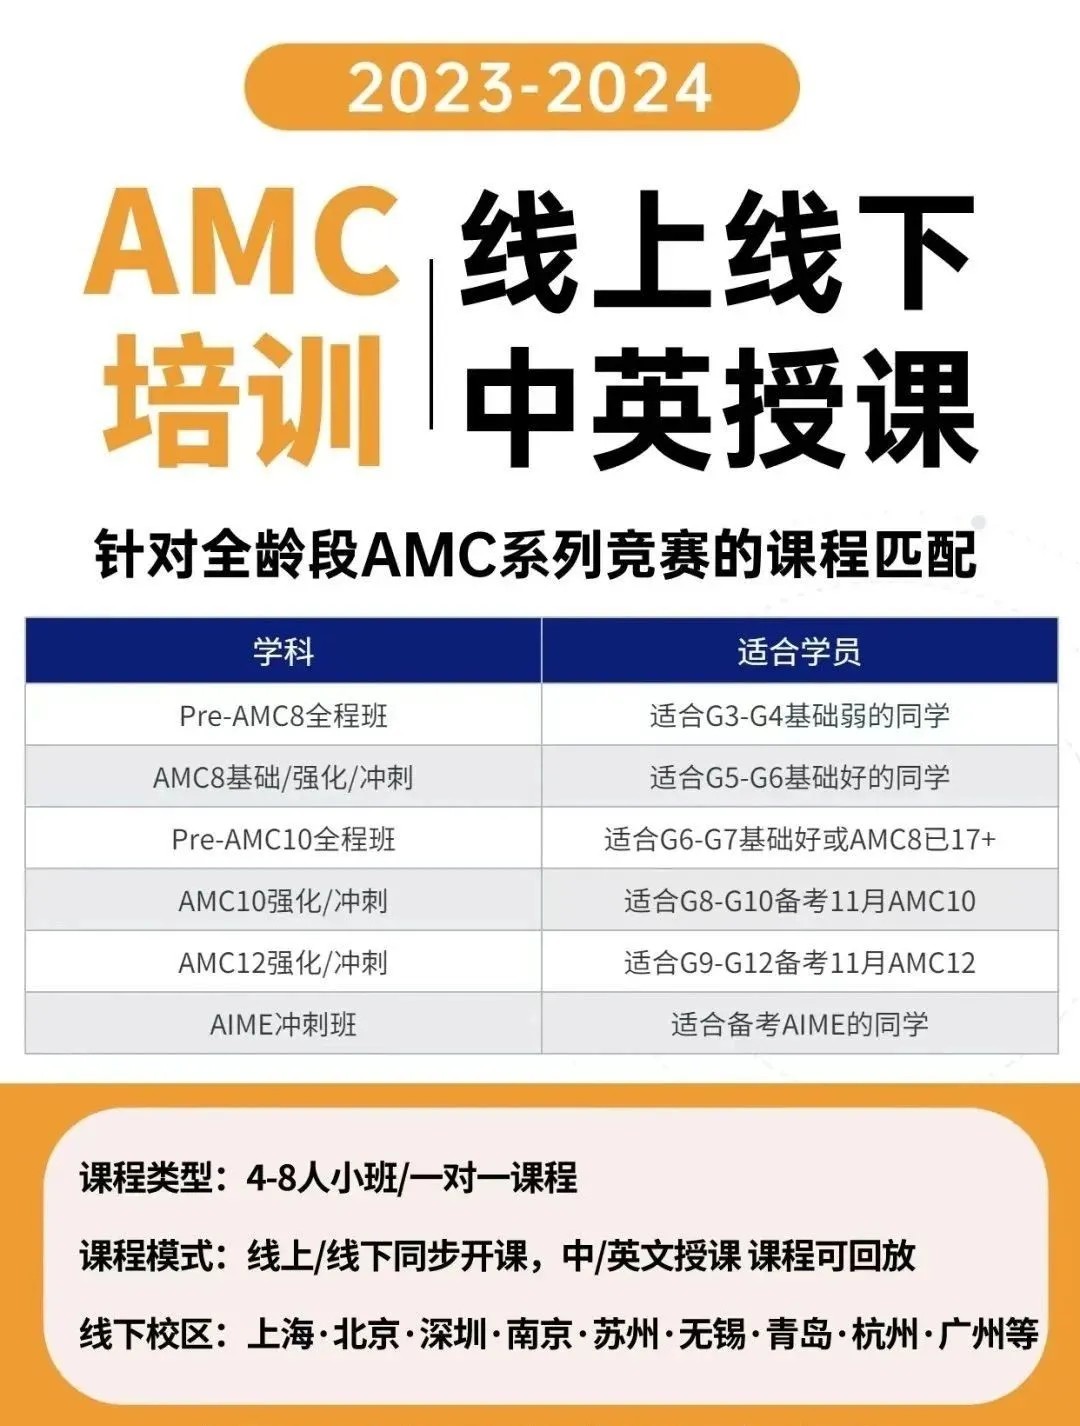 AMC12数学竞赛成绩对申请有帮助吗？AMC12竞赛备考福利礼包：公式/知识点/真题...